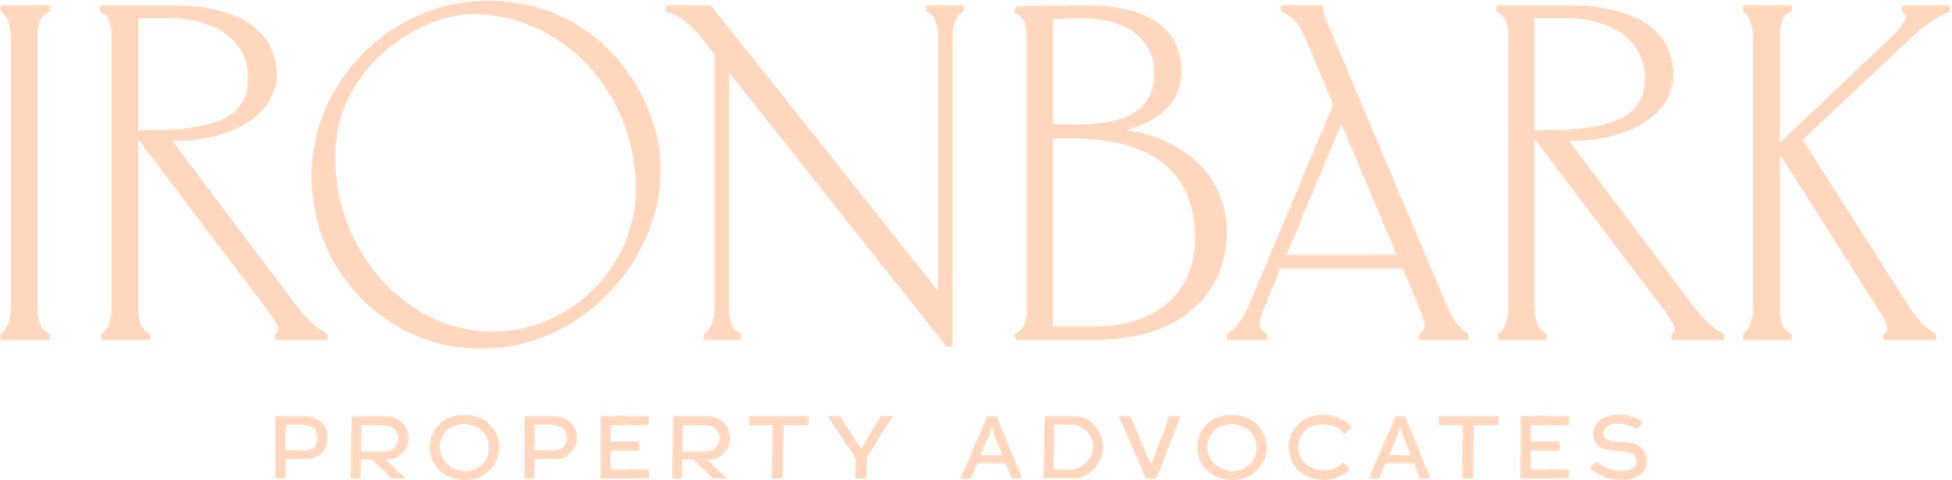 Ironbark Property Advocates Logo